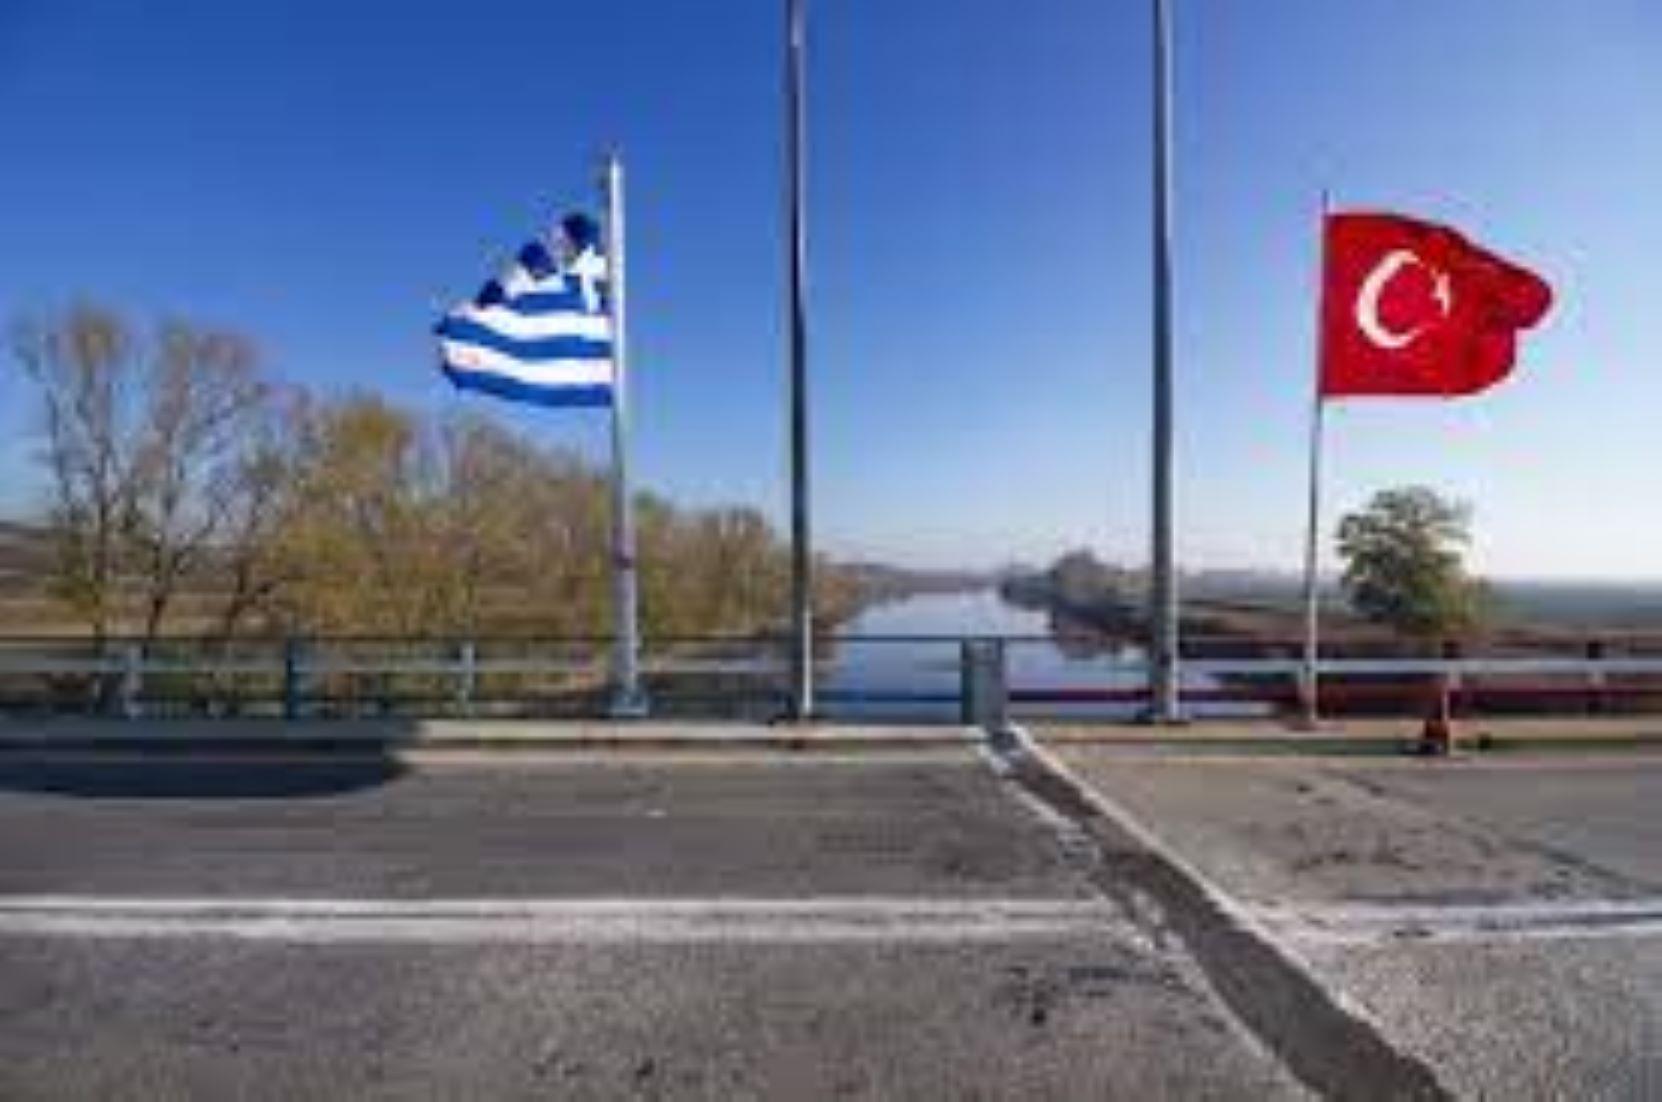 Türkiye, Greece Step Up To Build 2nd Bridge At Ipsala: Media